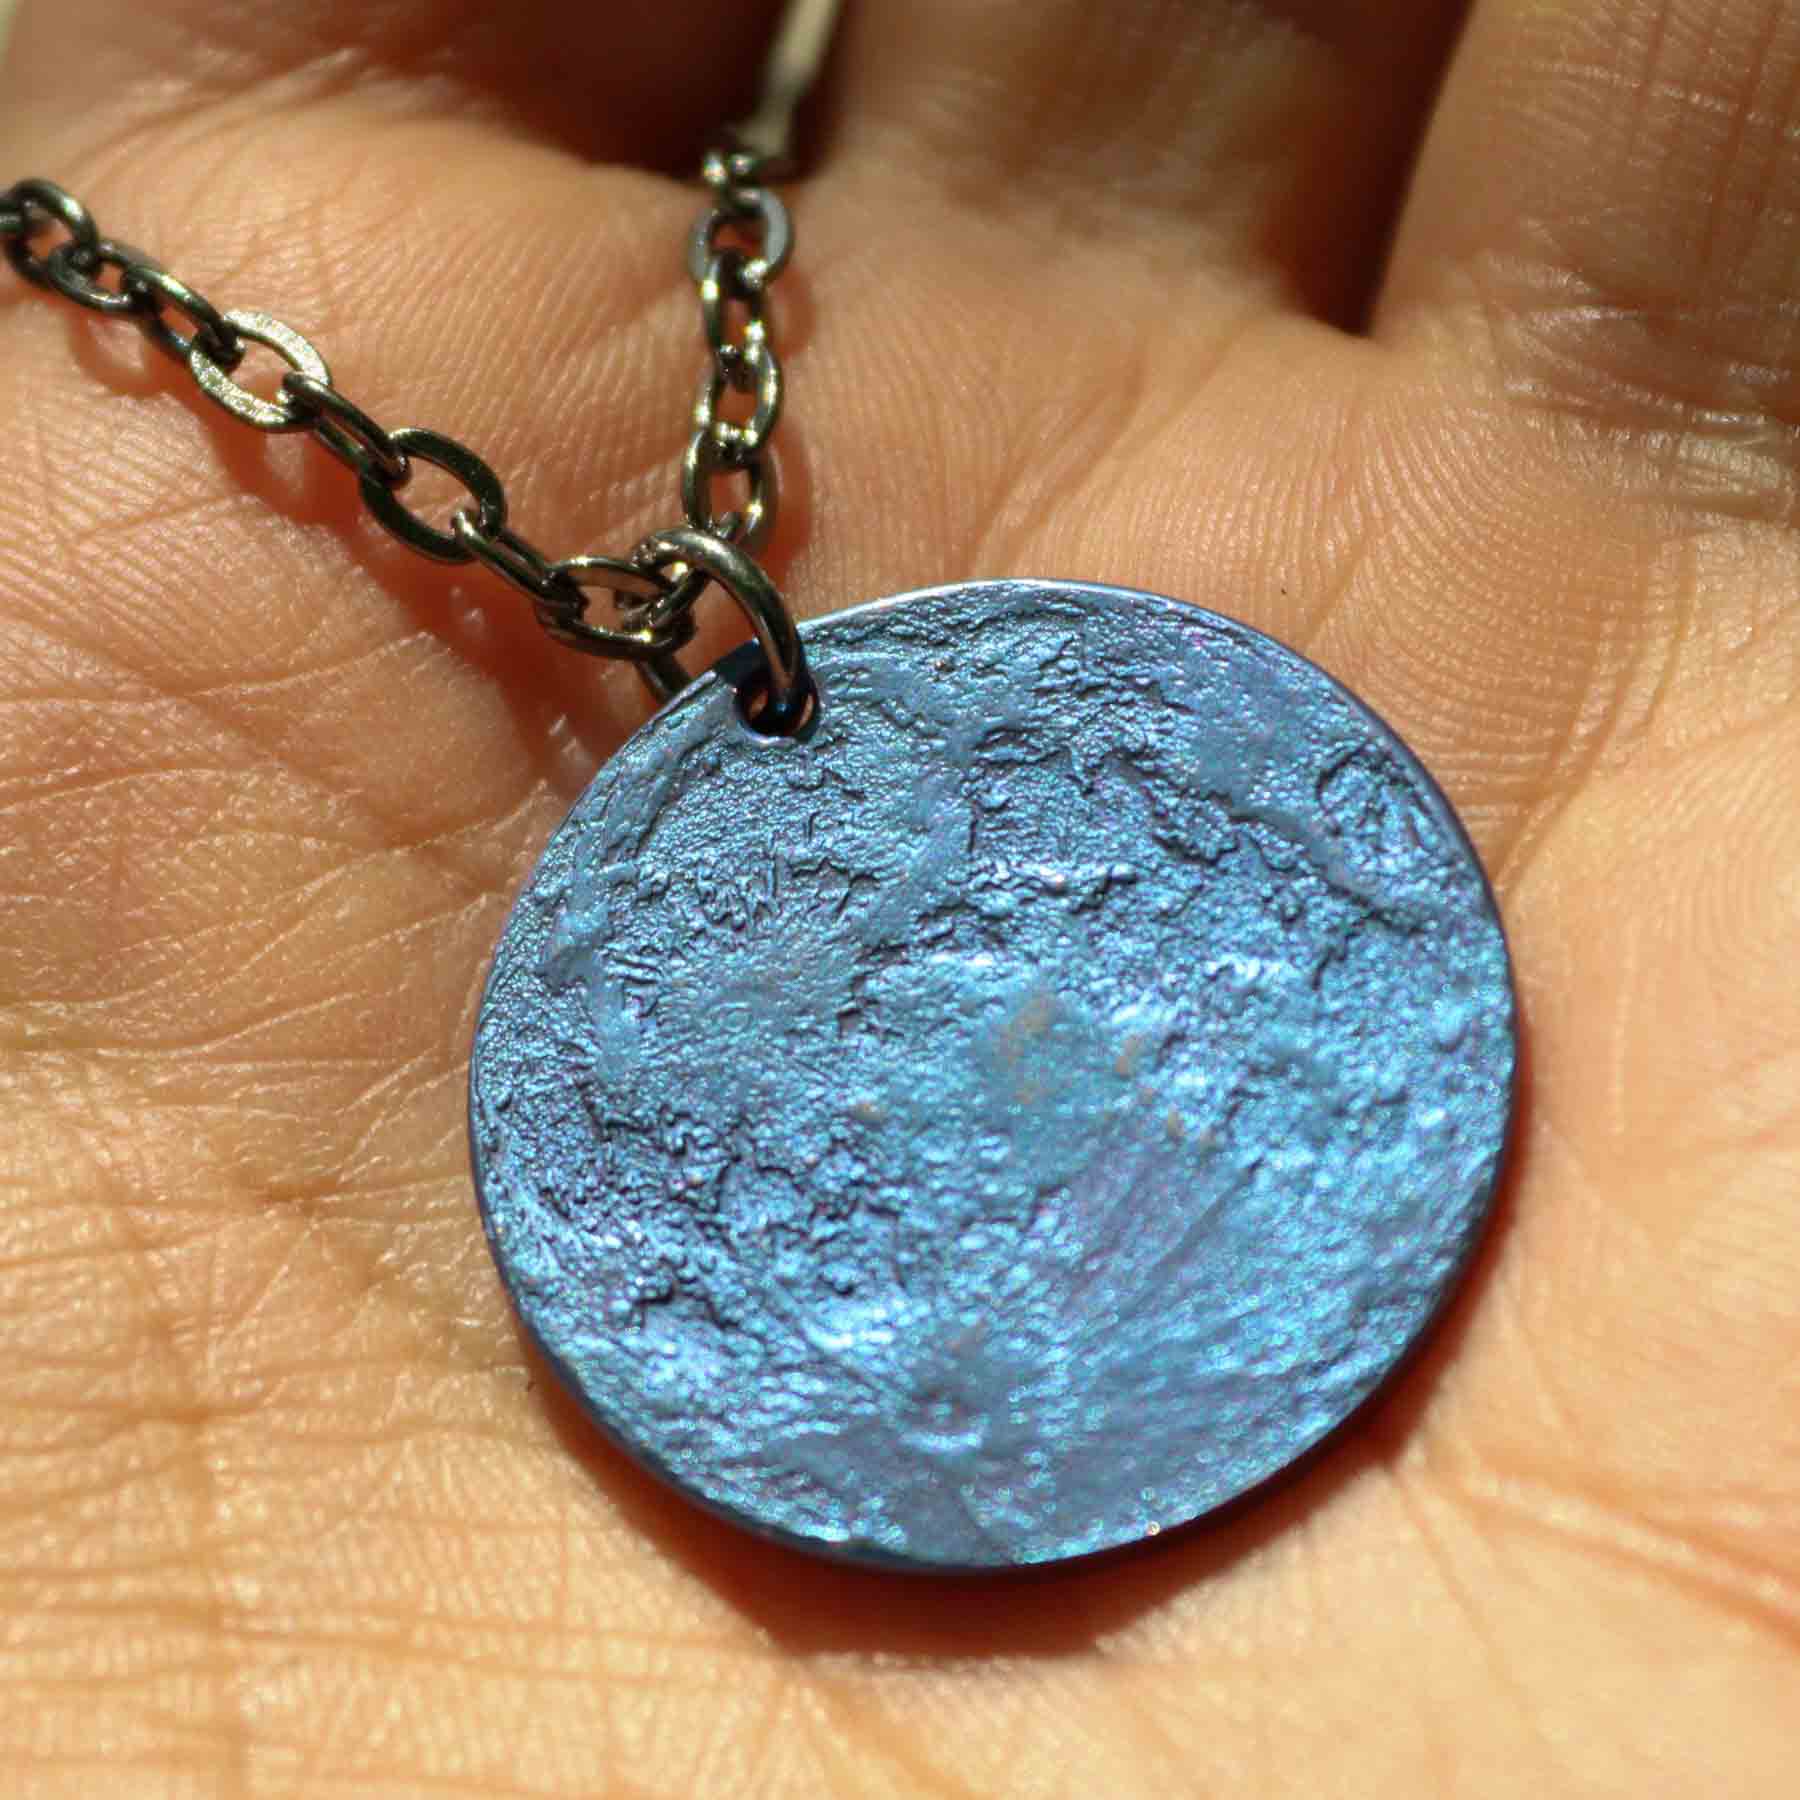 Blue Moon Necklace - 1" Anodized Niobium Charm or Pendant